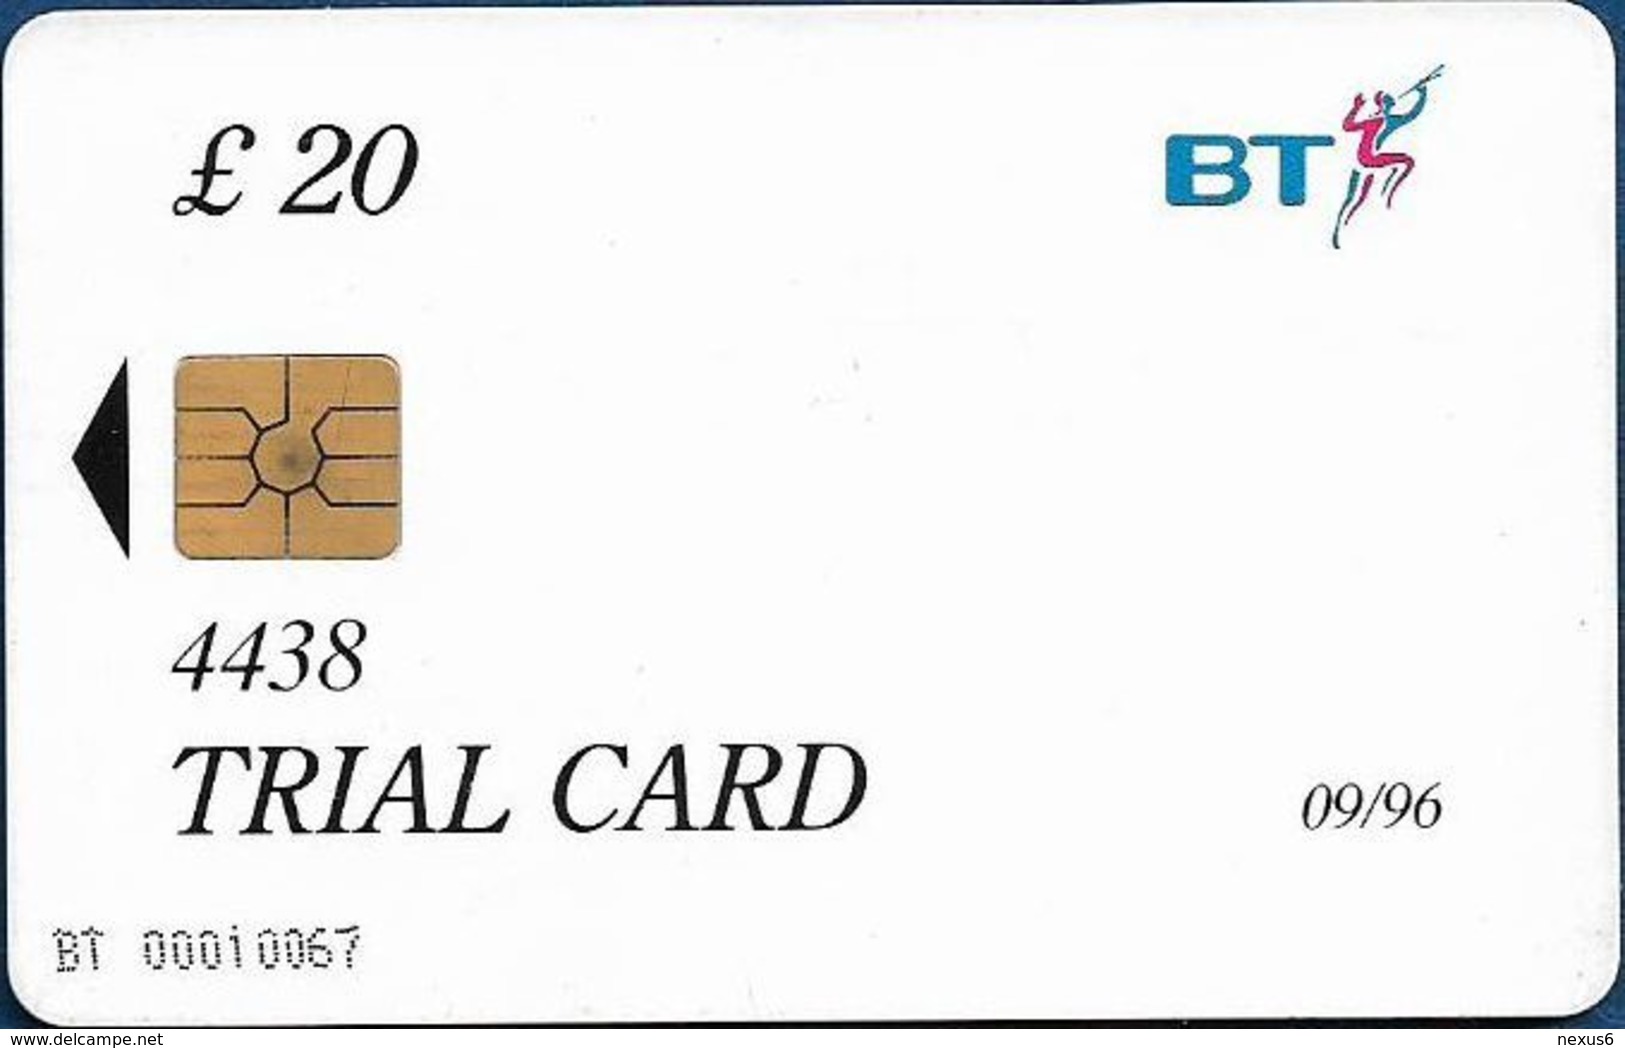 UK - BT - BCF - Rose Trial Card 20£, TRL016a (With Date, Written 4438, Big Gemplus), 09.1996, 2.000ex, Used - BT Test & Trials